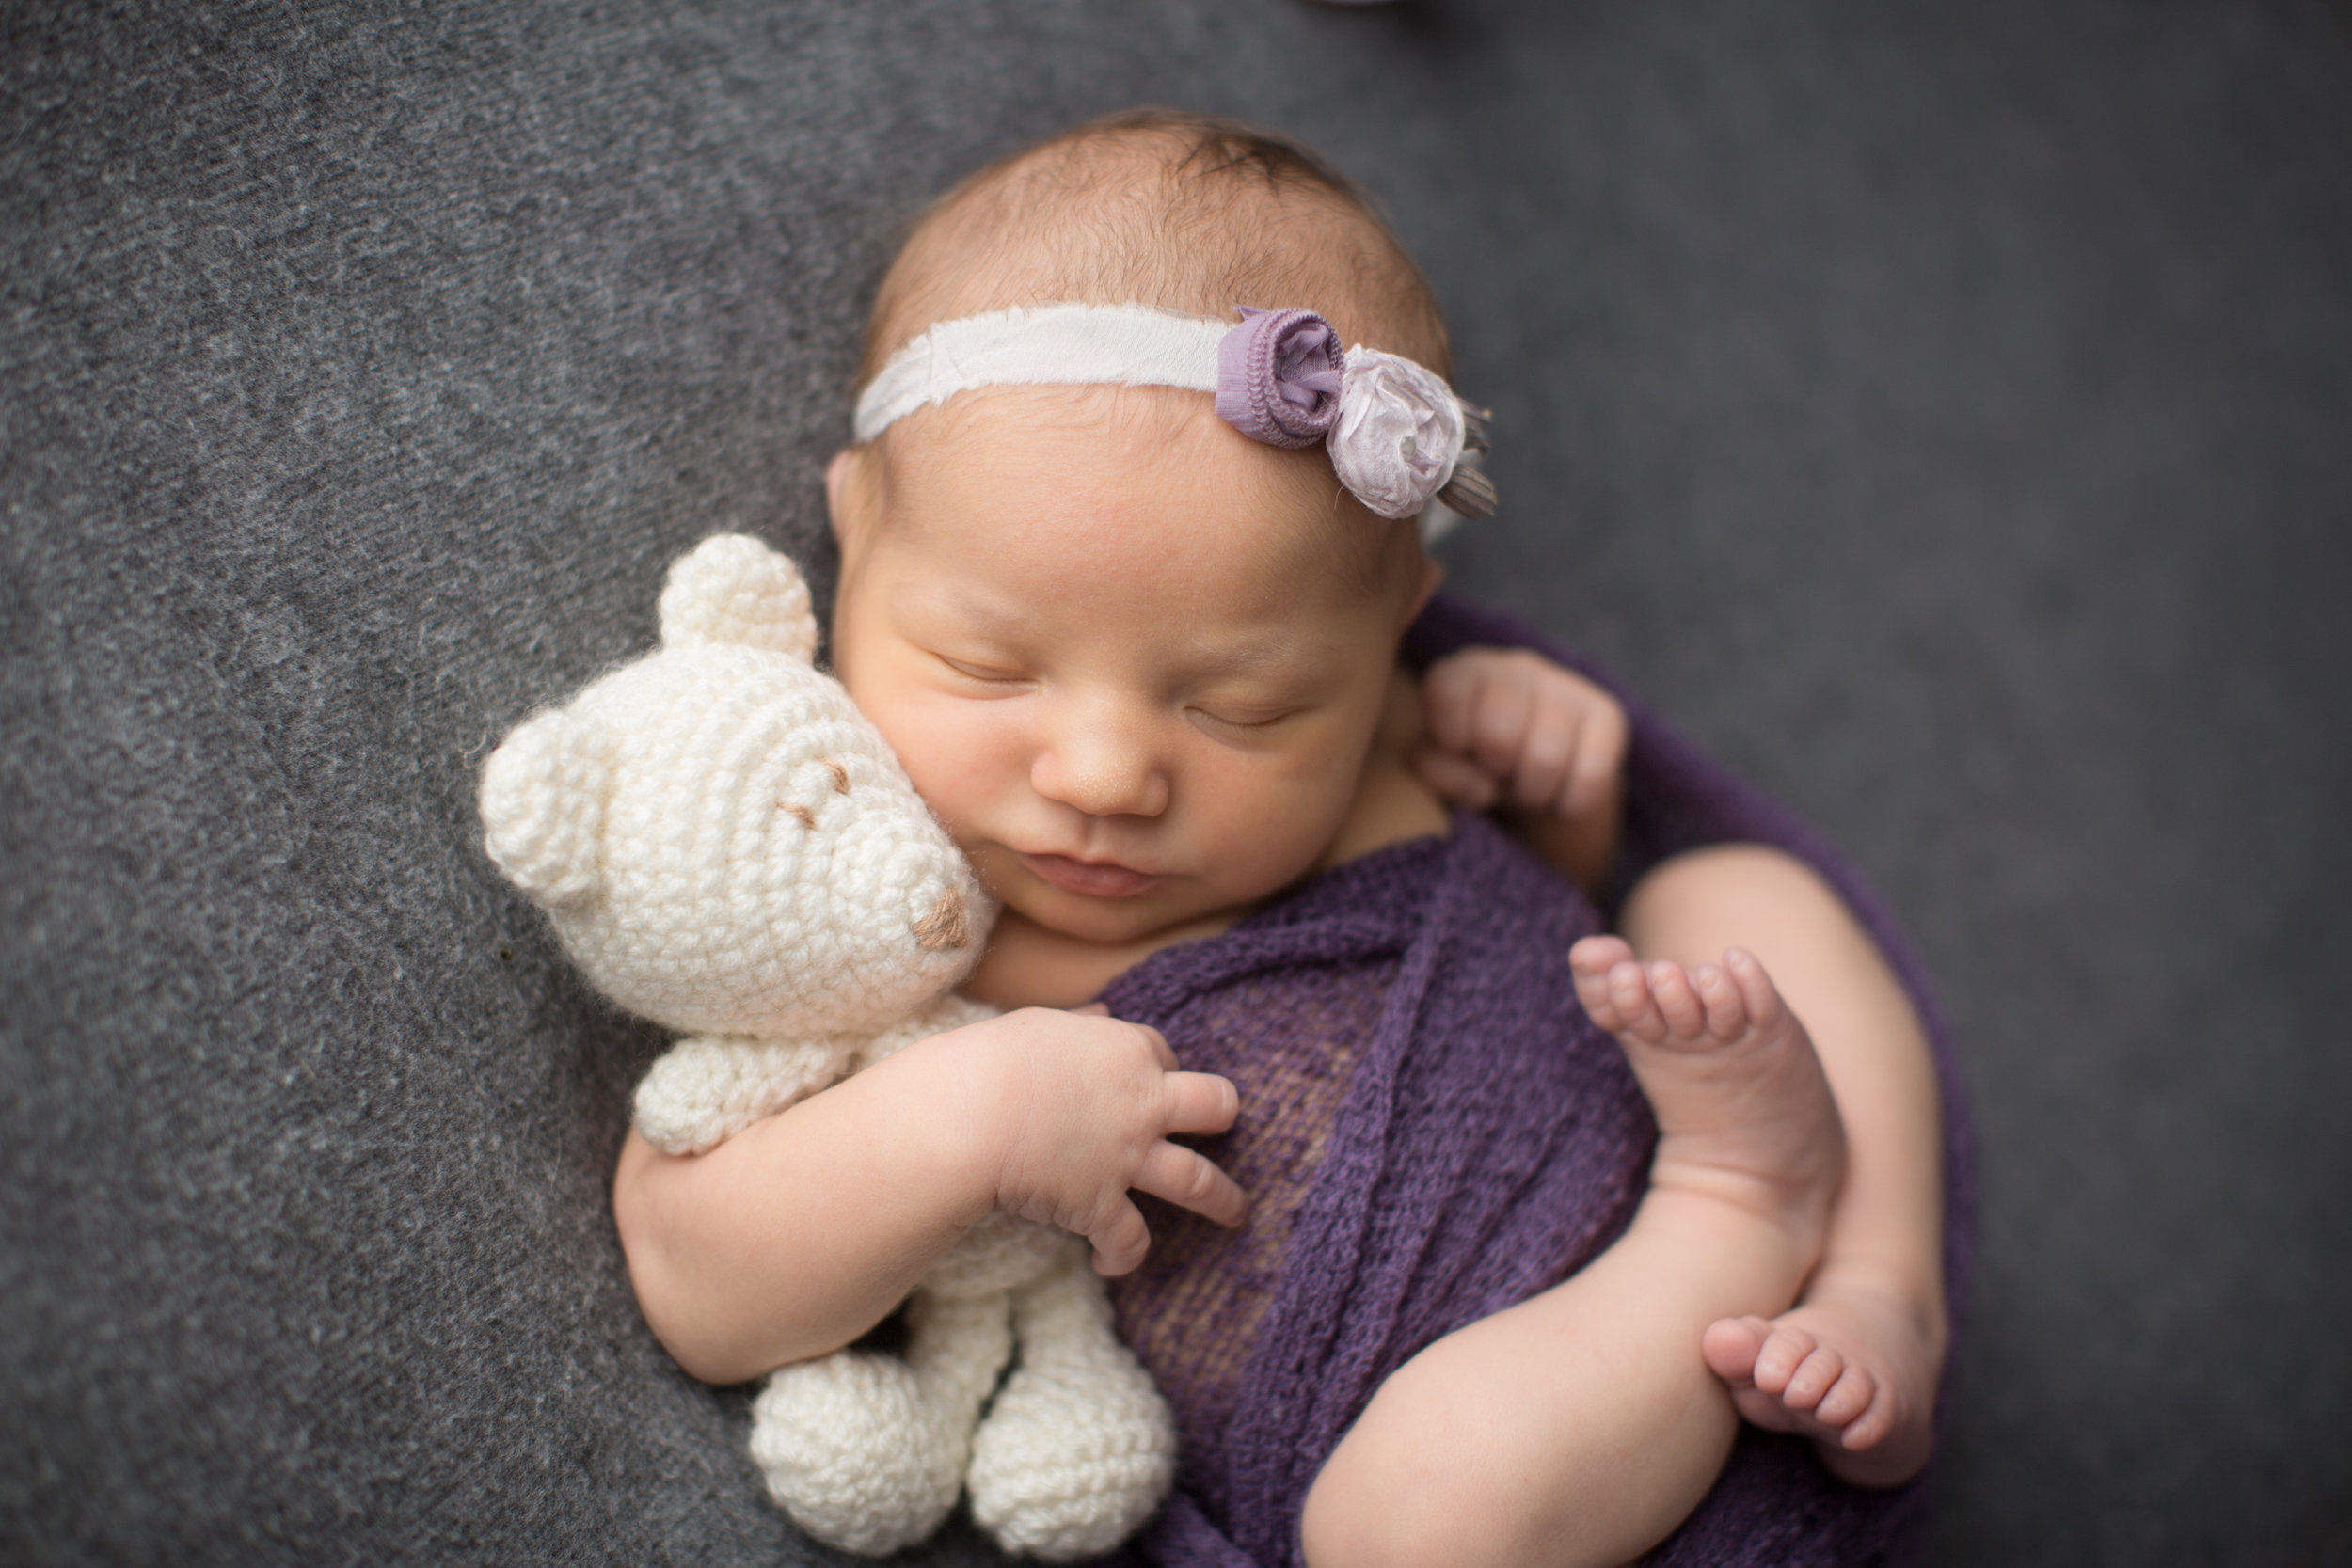  professional portrait of a newborn baby girl holding a teddy bear 